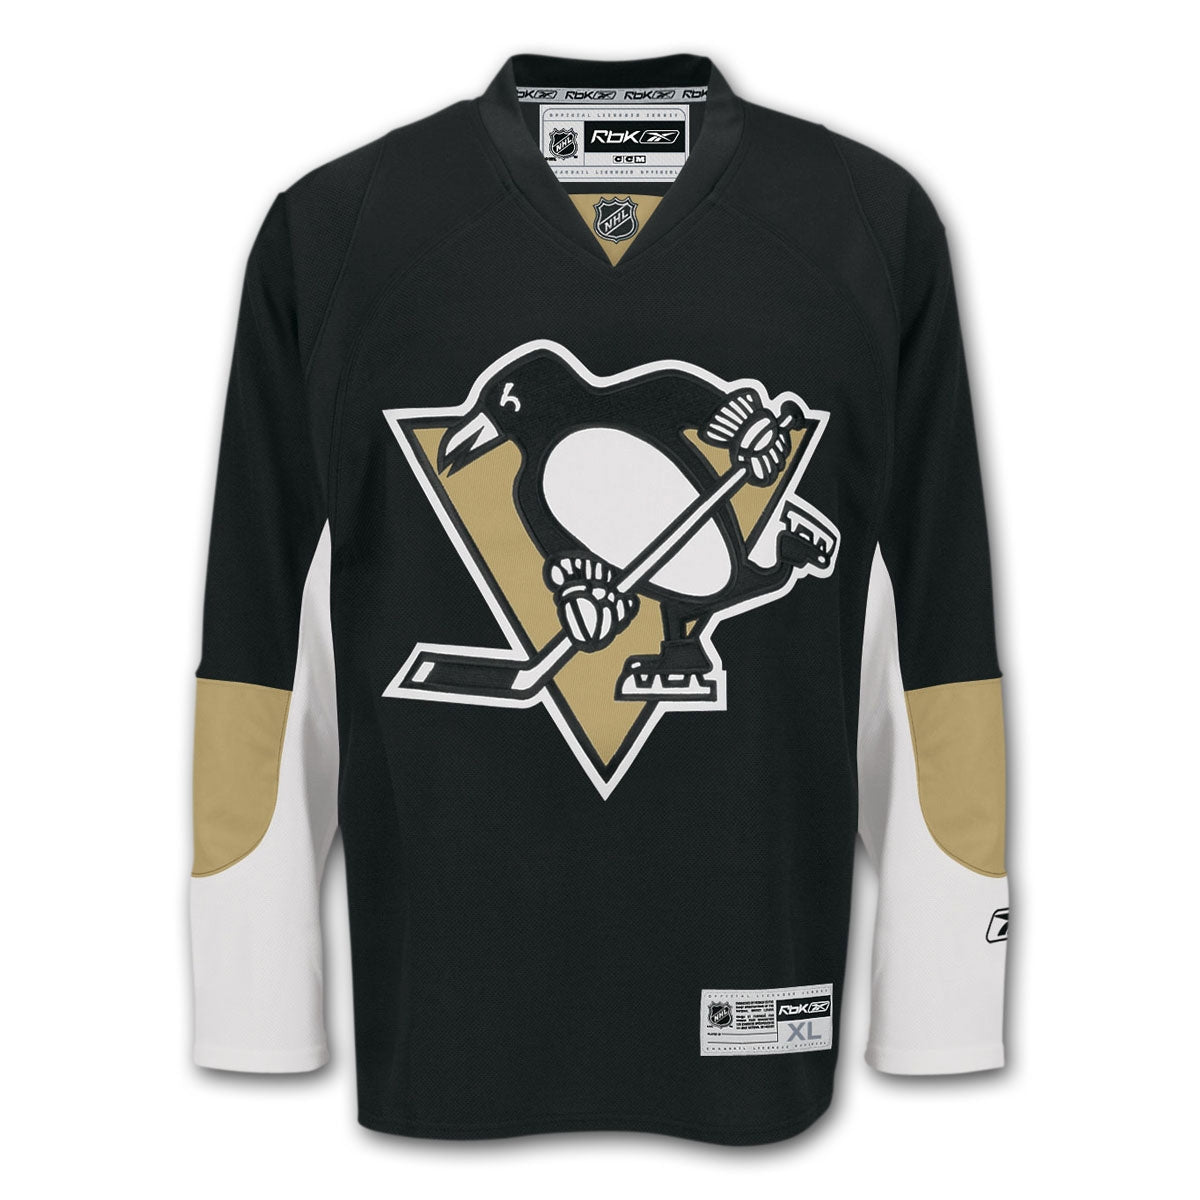 Reebok Premier Pittsburgh Penguins NHL Hockey Jersey Senior - Black, X-Large